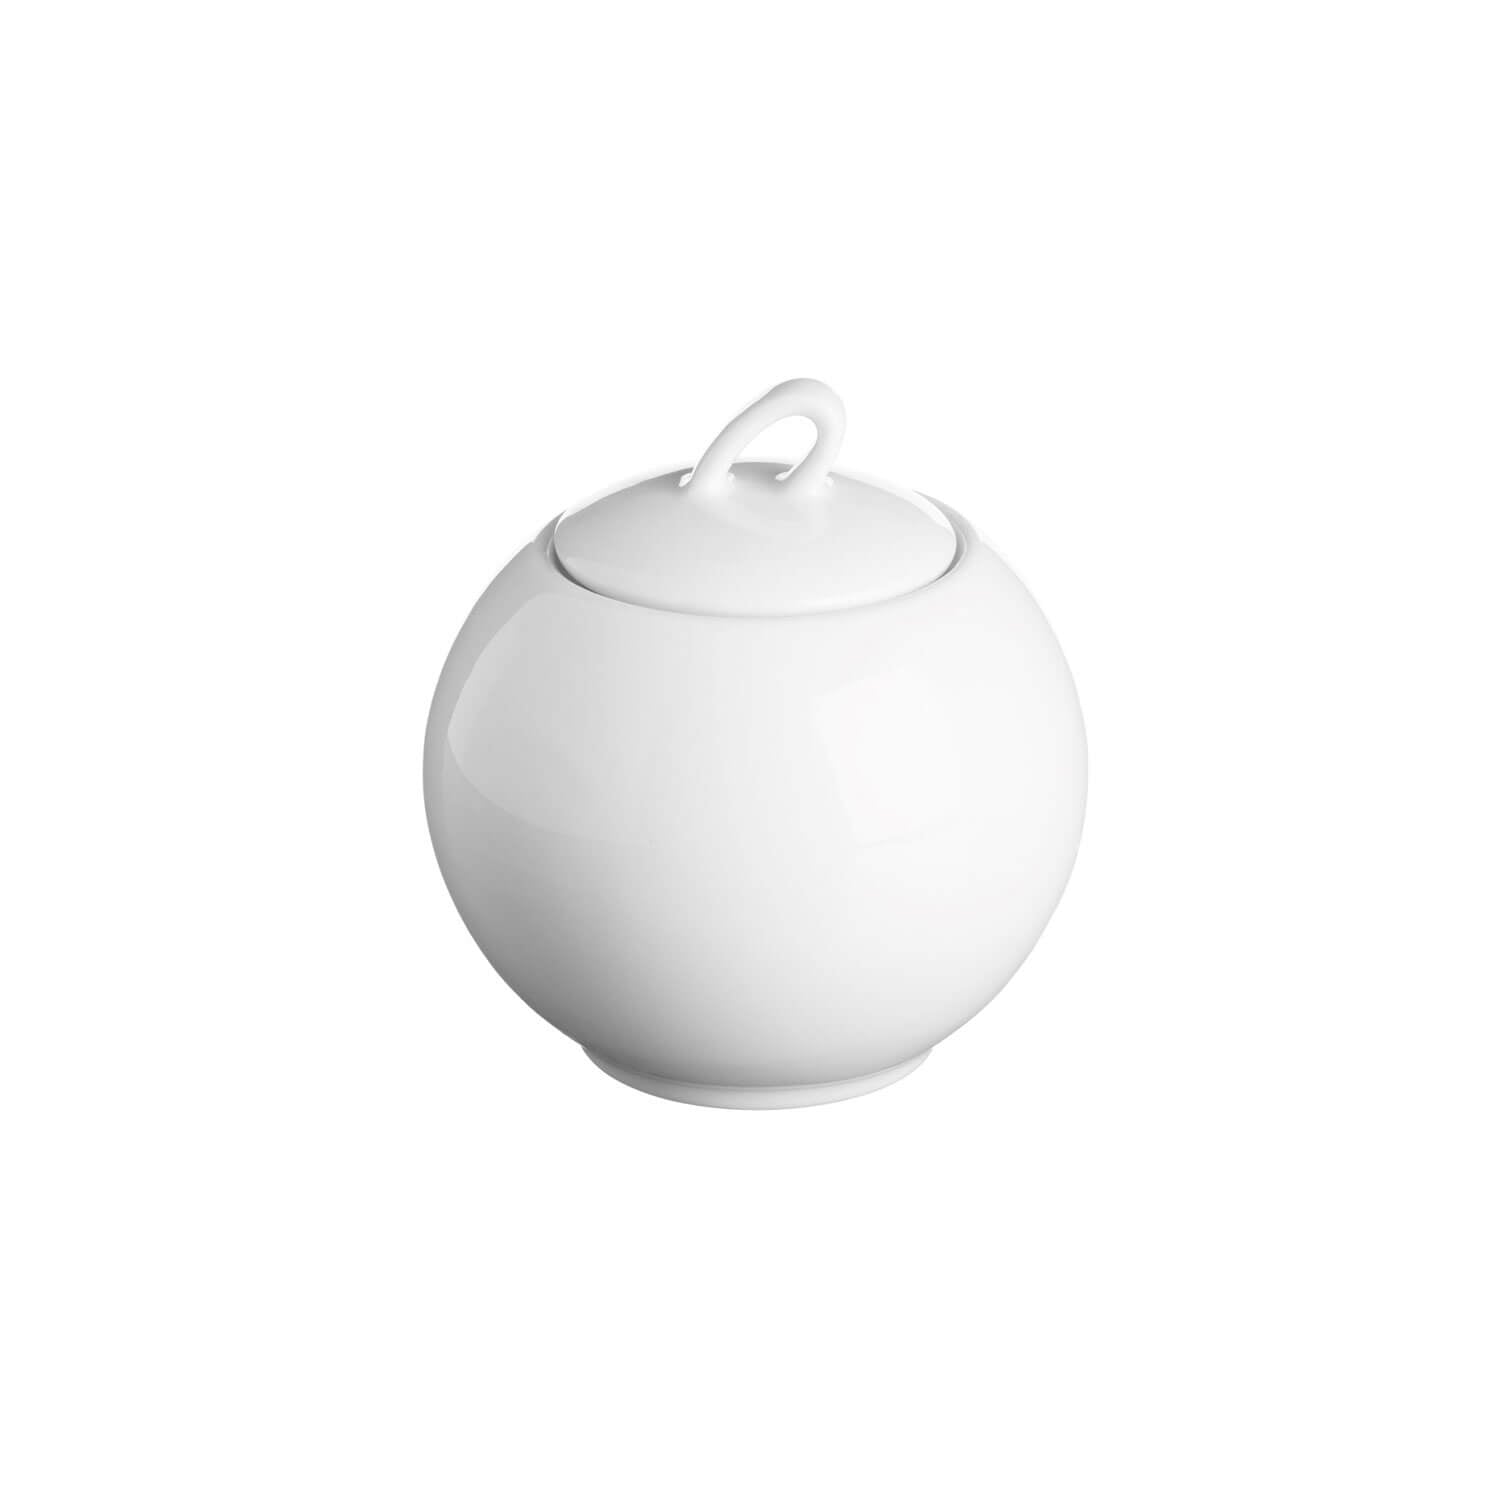 Price &amp; Kensington Simplicity Sugar Bowl with Lid 1 Shaws Department Stores